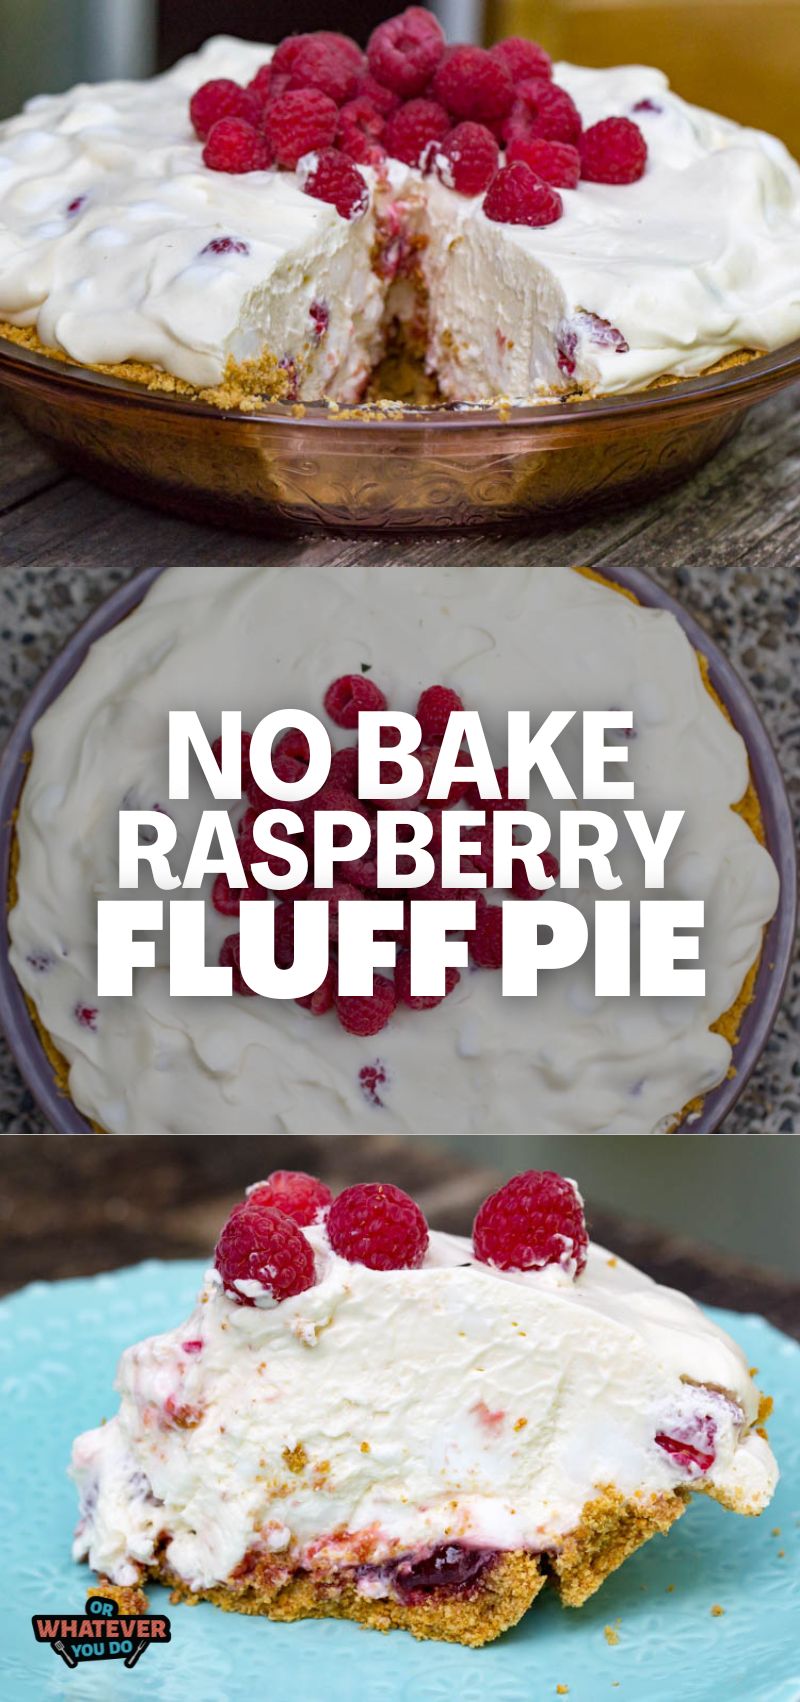 Raspberry Fluff Pie